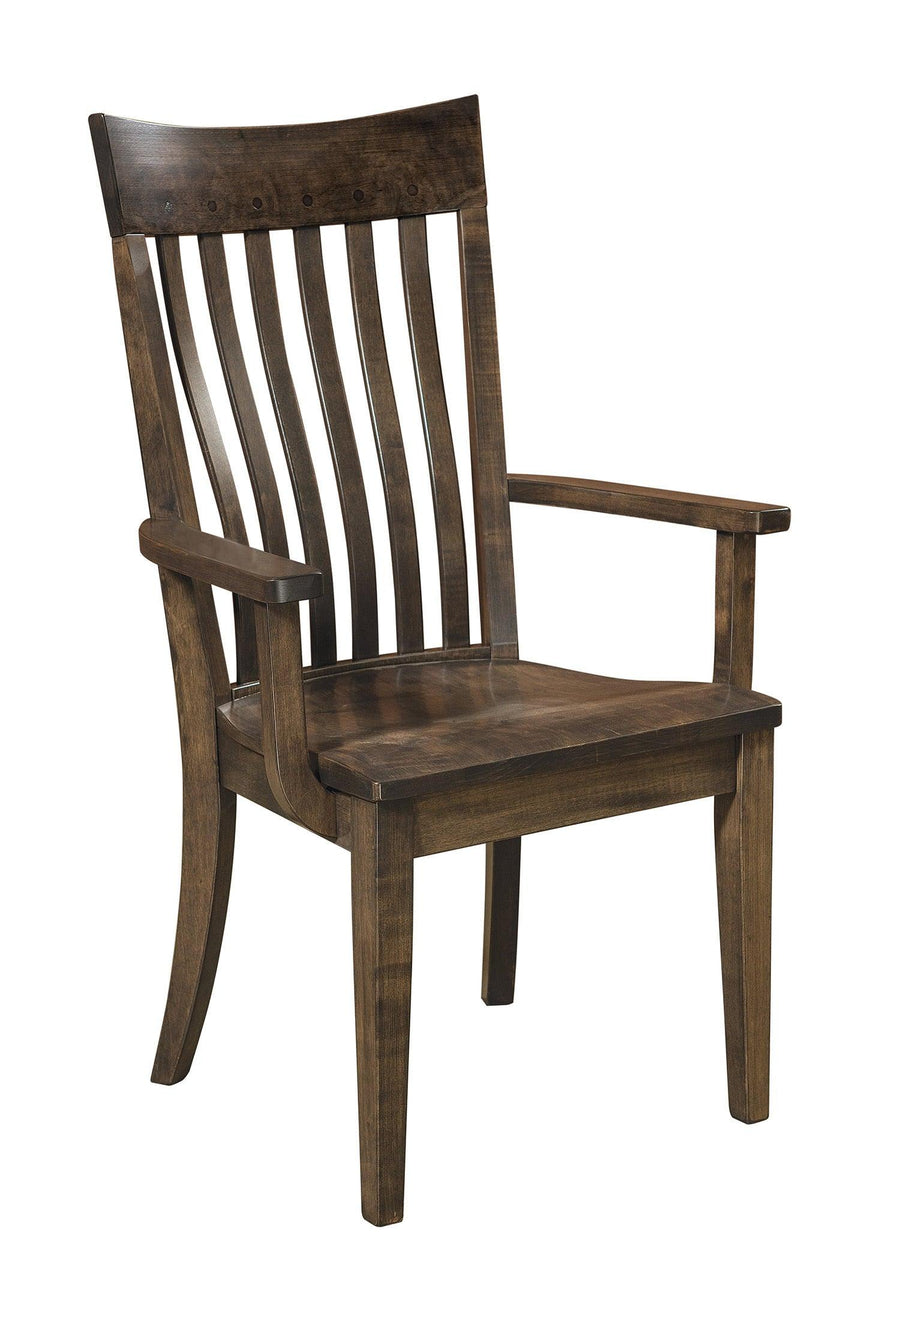 Fontana Amish Arm Chair - Herron's Furniture